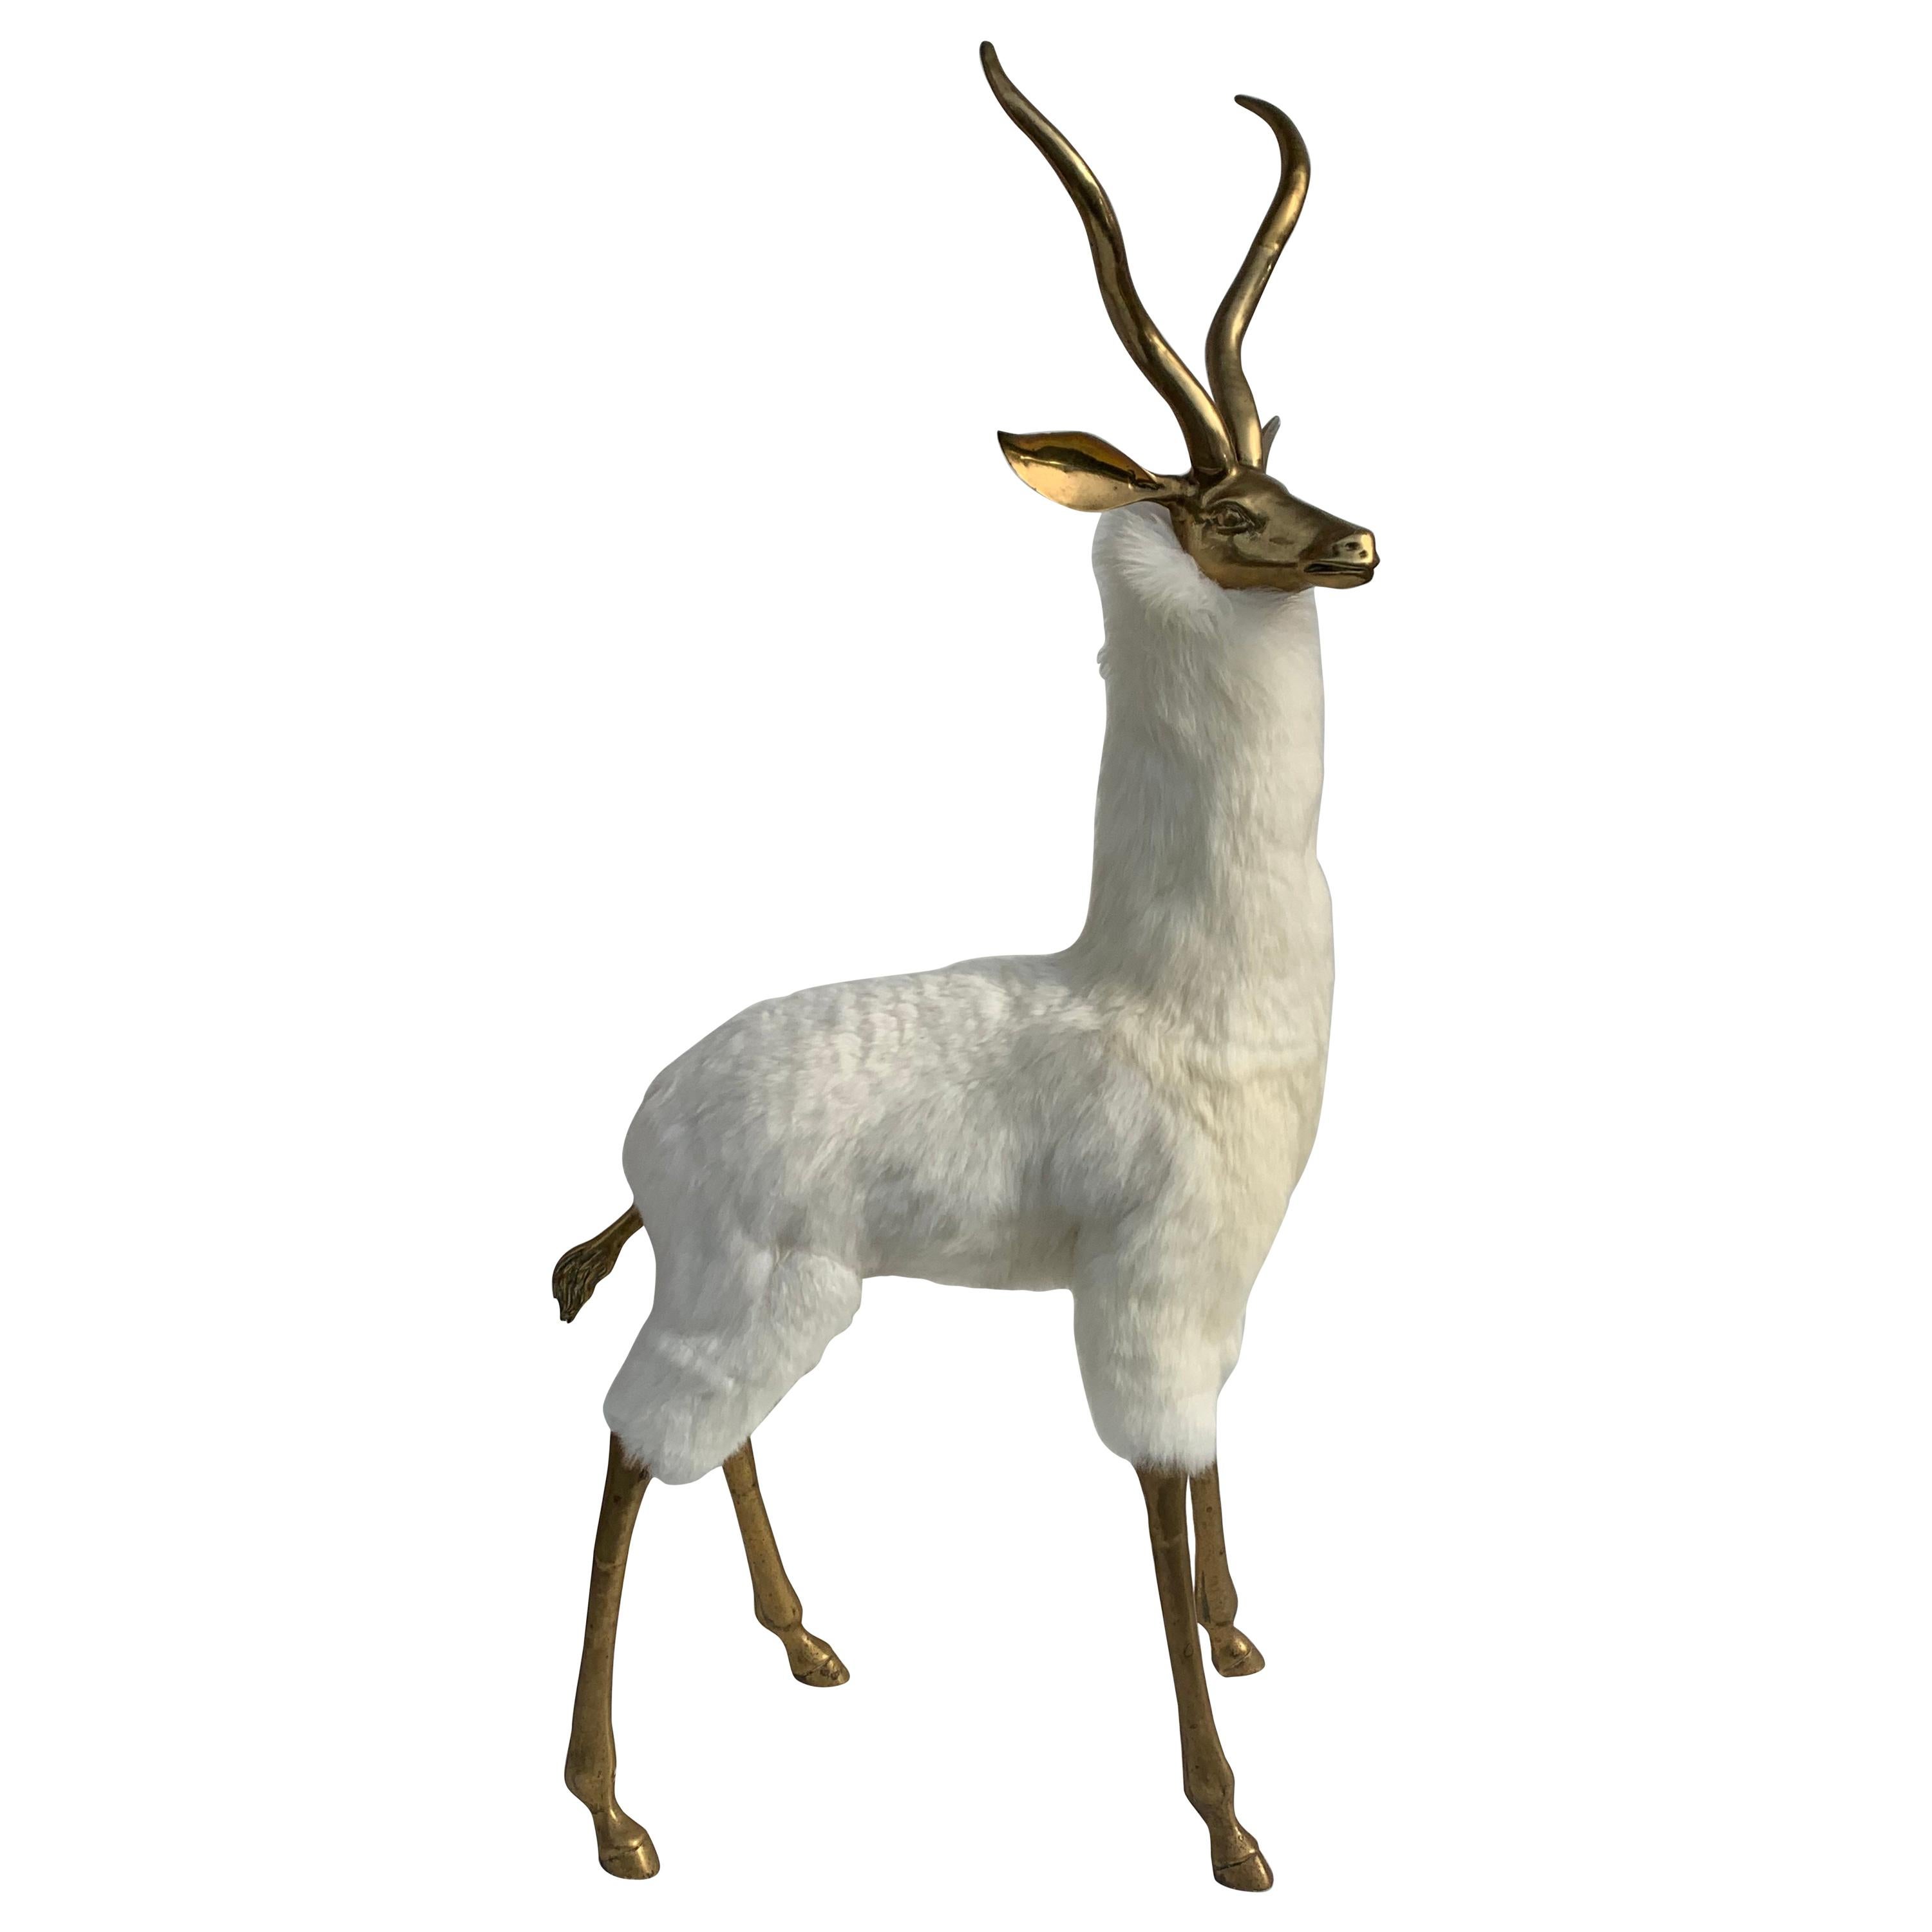 Brass Gazelle or Antelope Sculpture in Fur